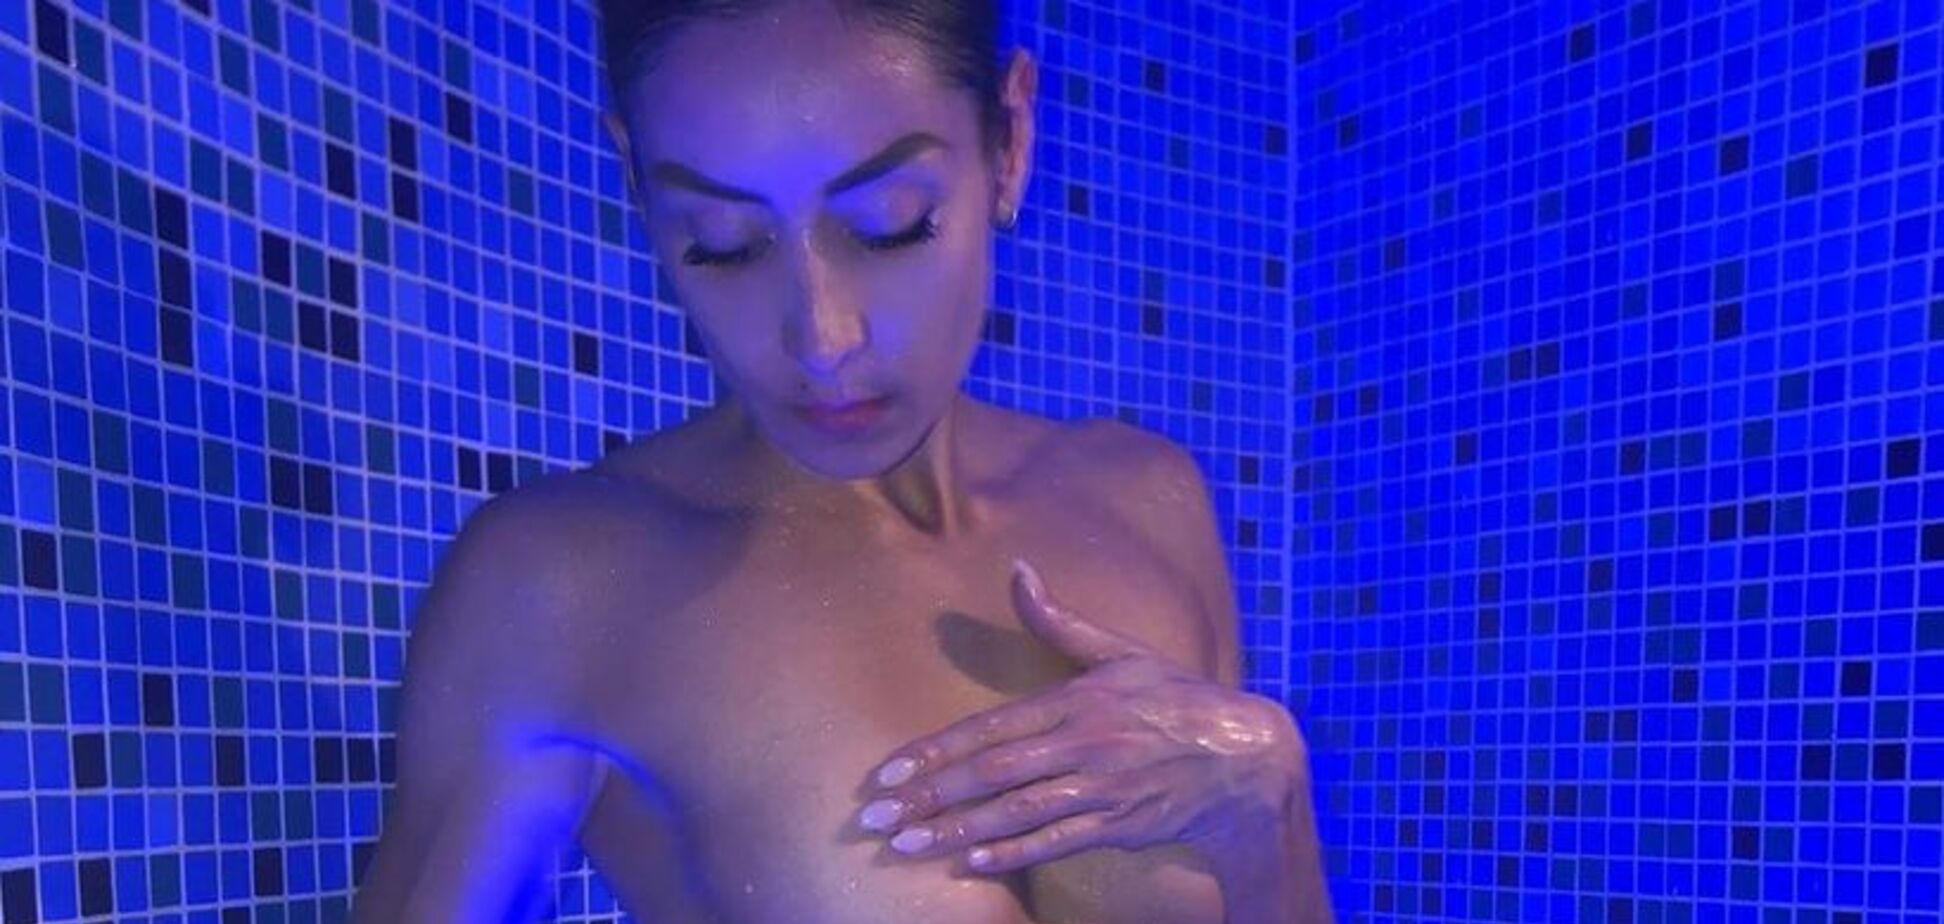 Знаменита фітнес-модель одягла 'голий' купальник і збудила Instagram